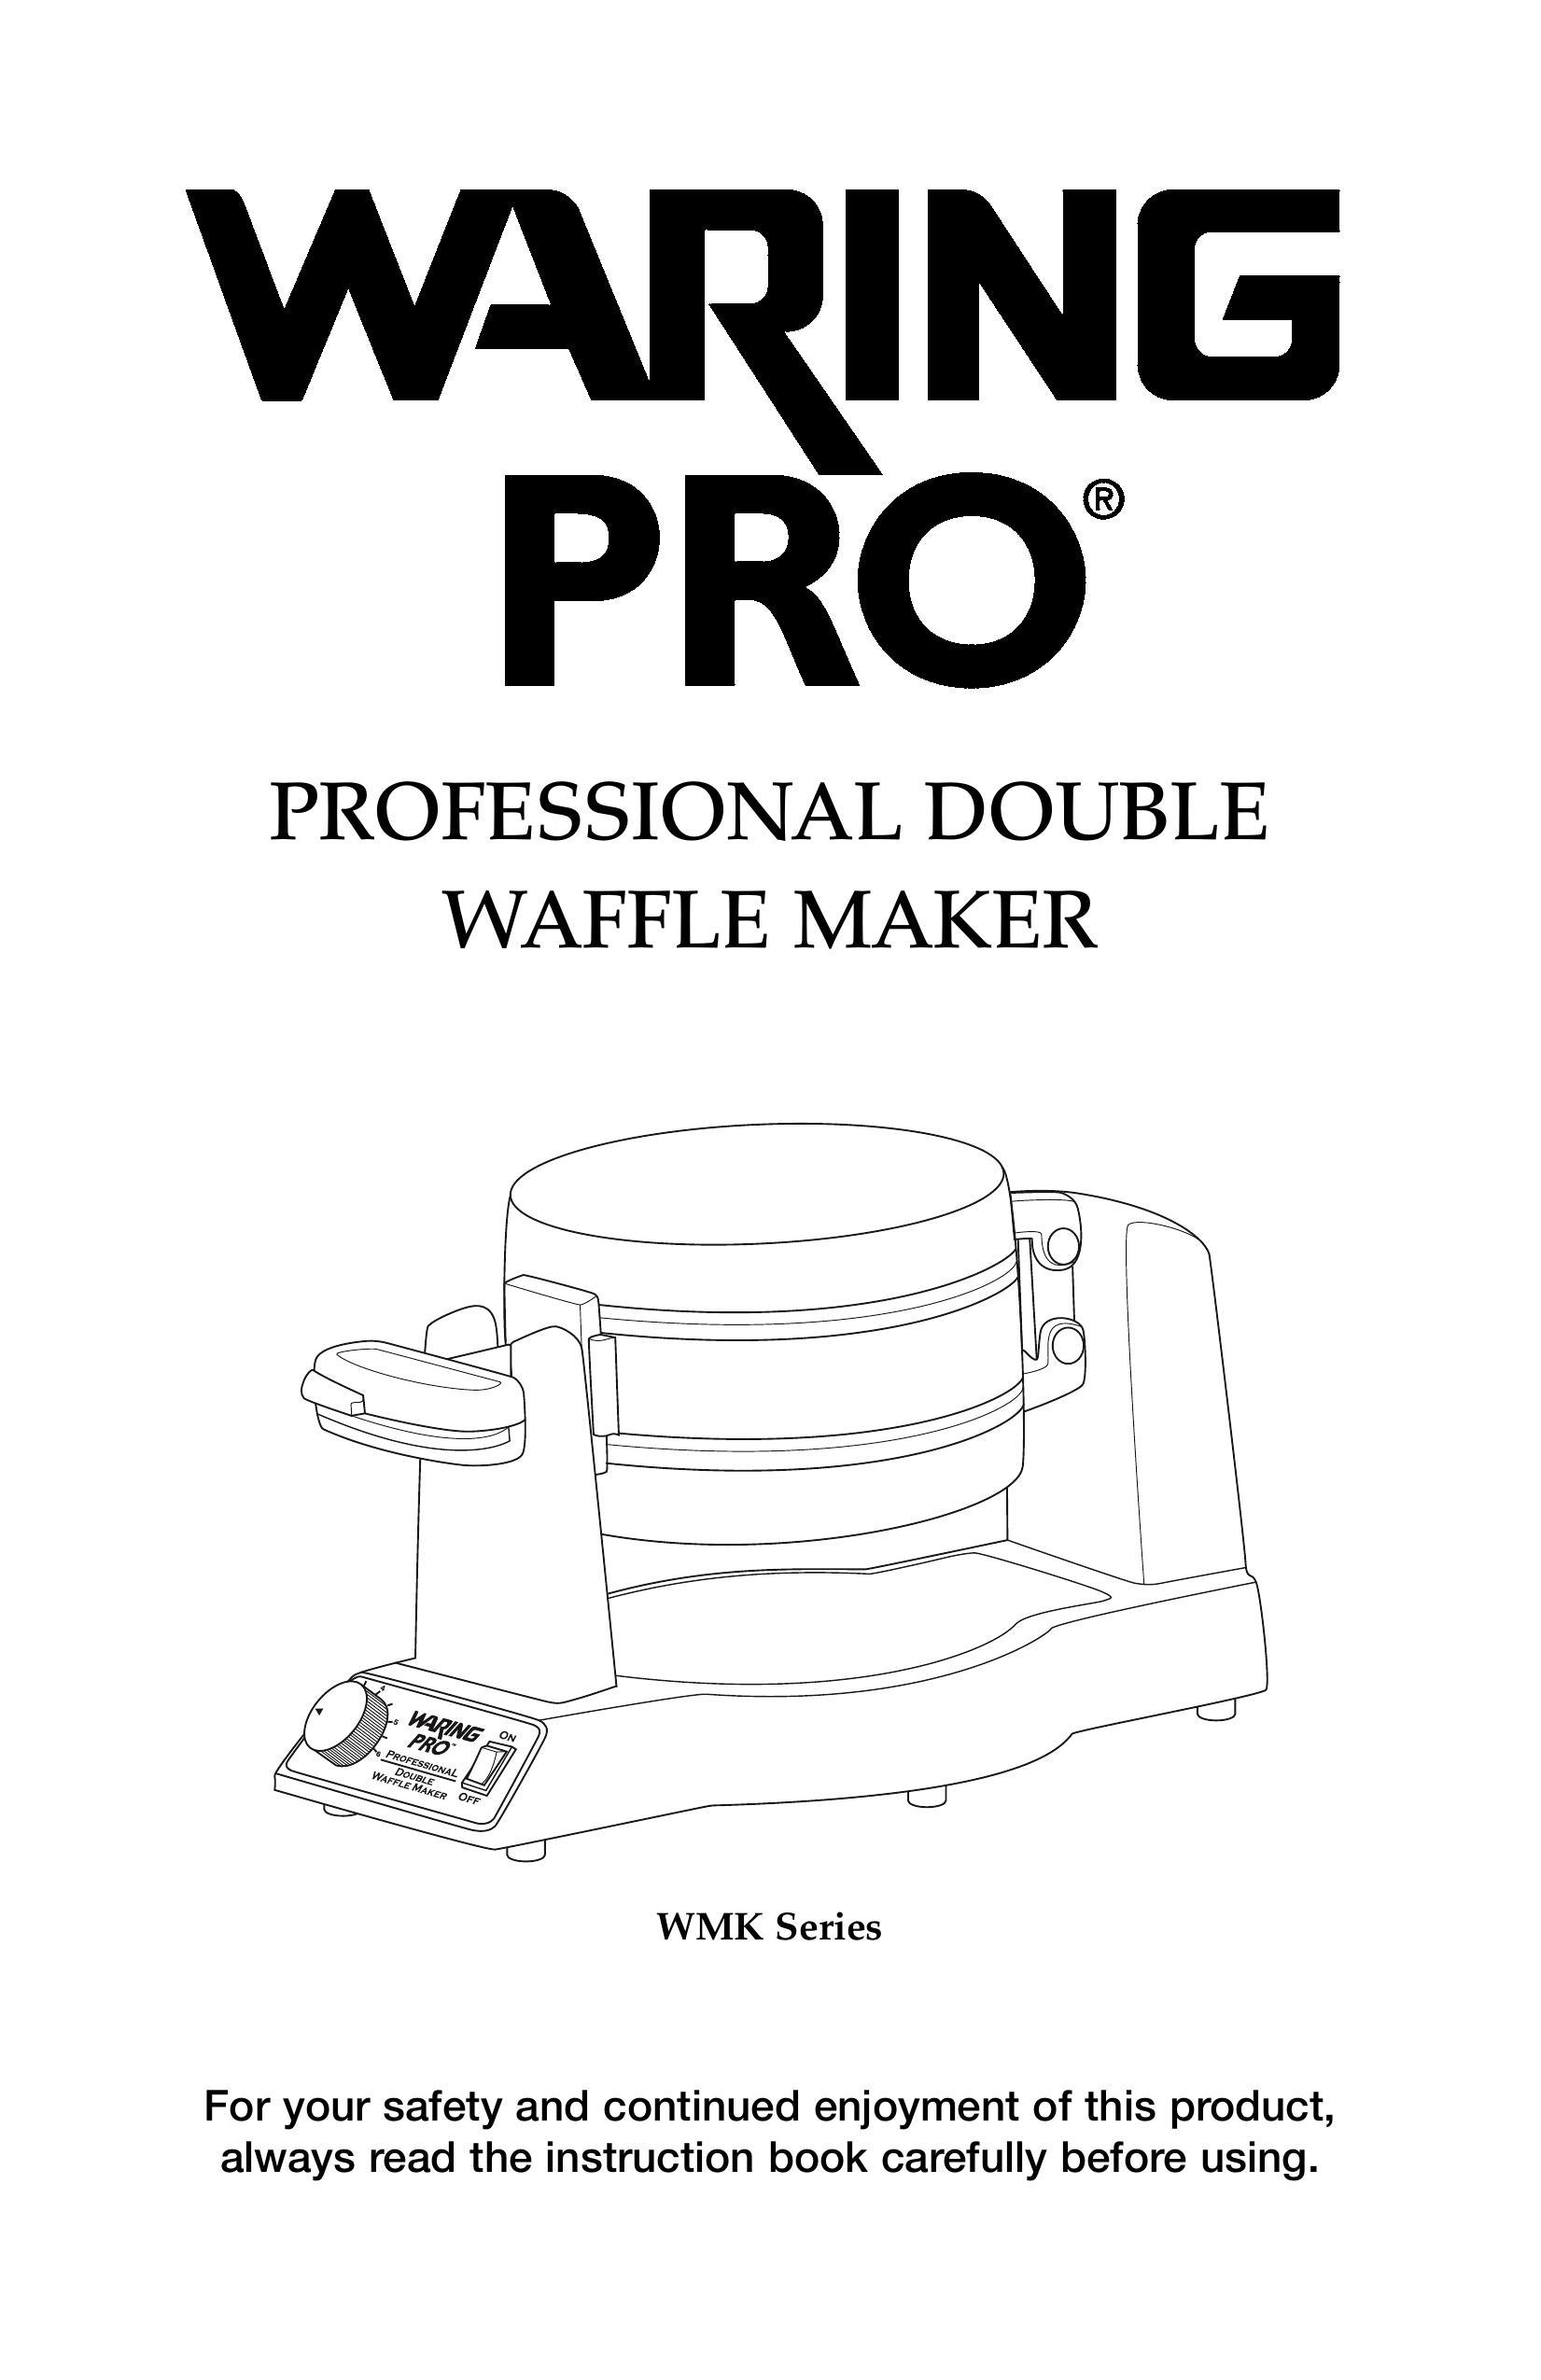 Waring WMK600 Waffle Iron User Manual